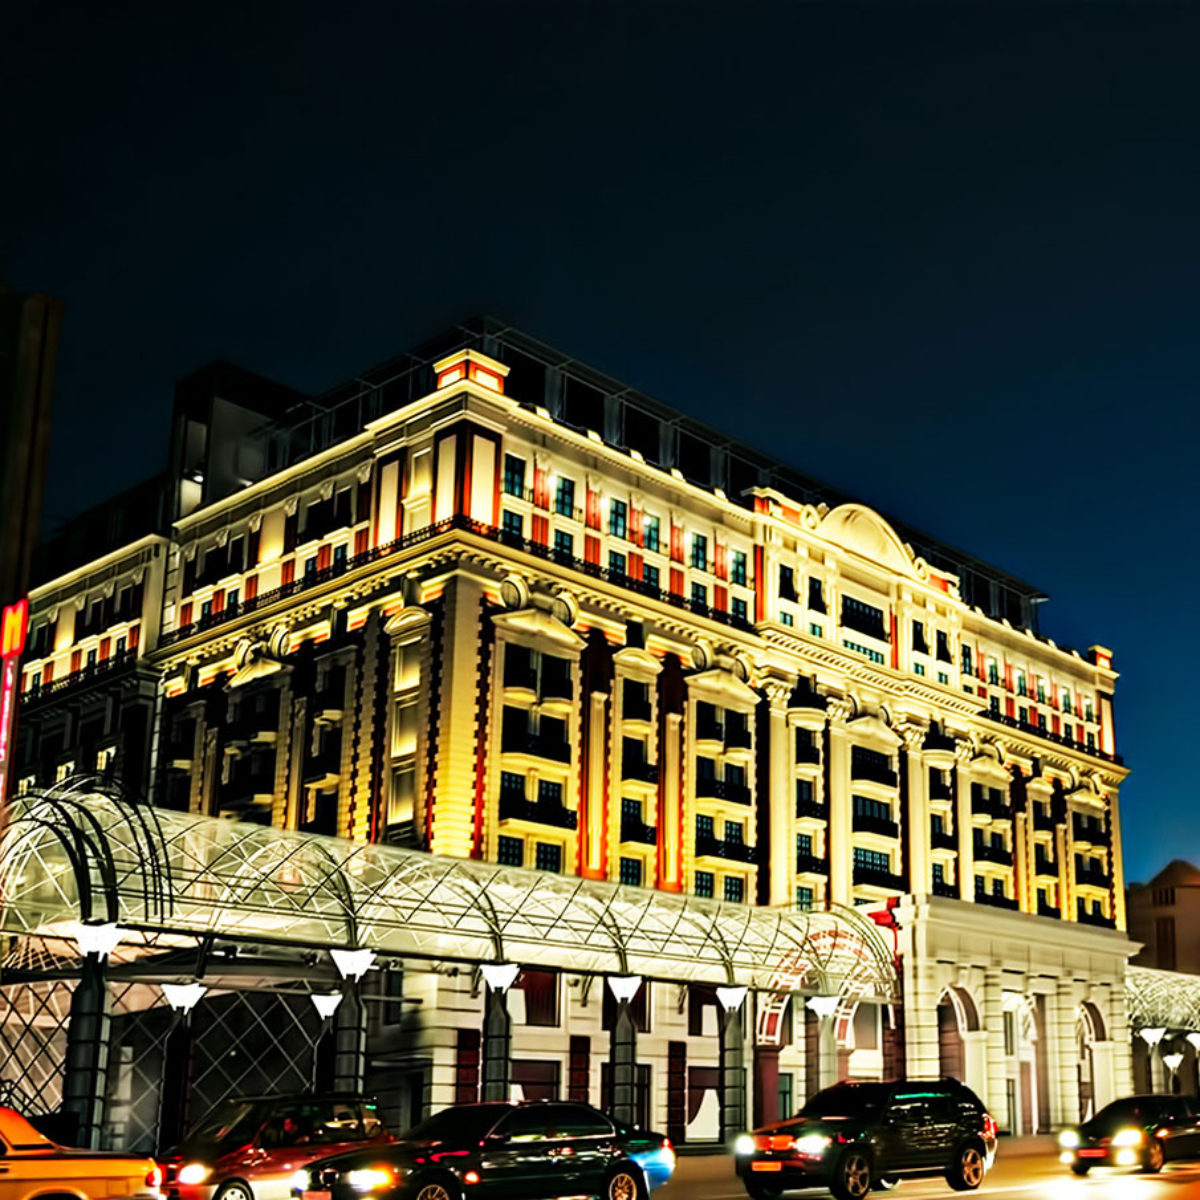 Ritz Carlton Hotel